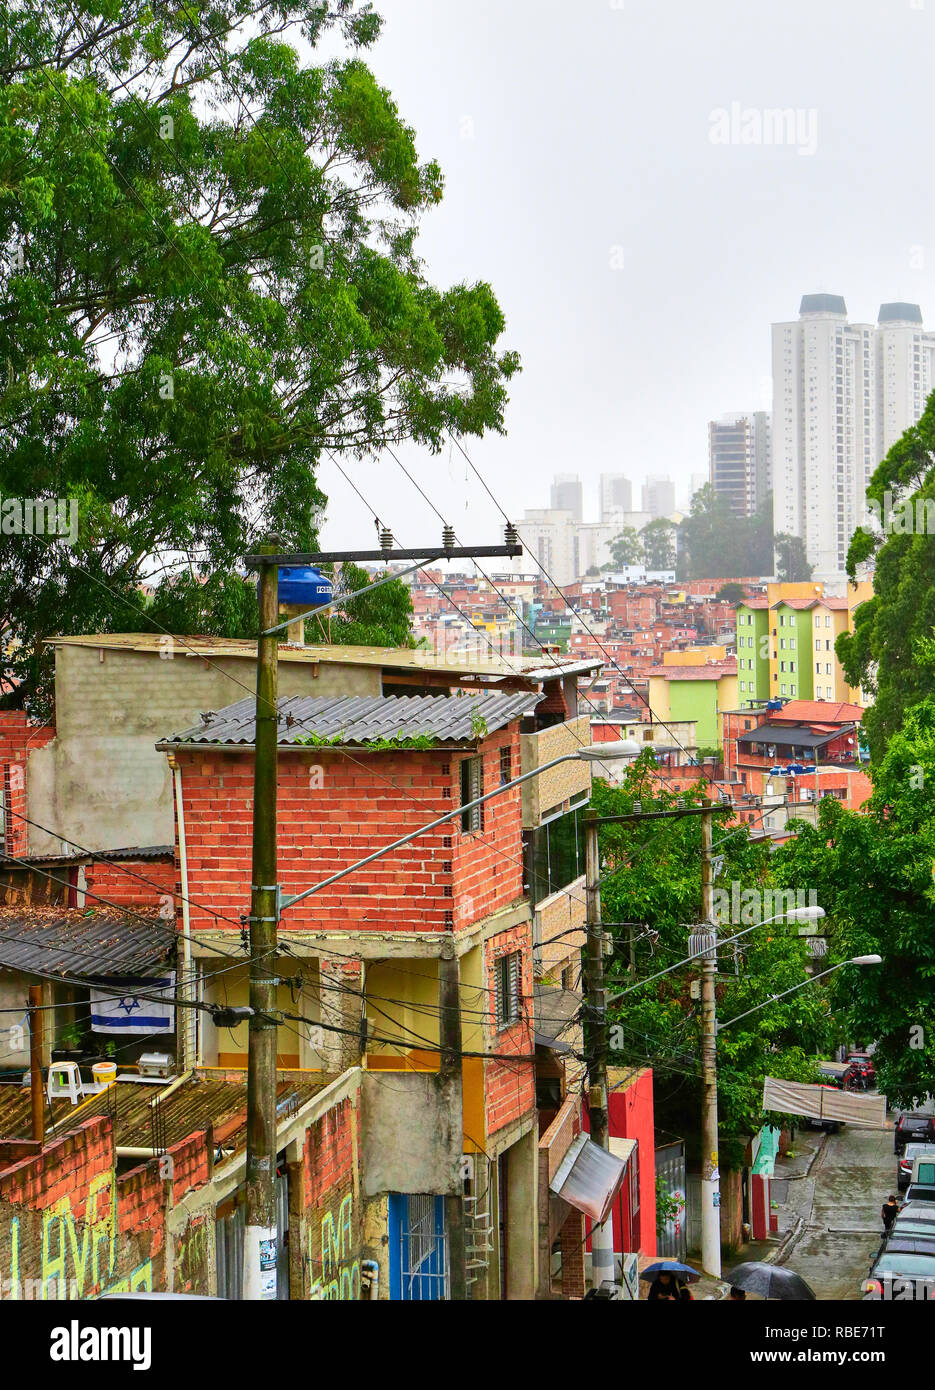 Favela slum in Sao Paulo, Brazil Stock Photo